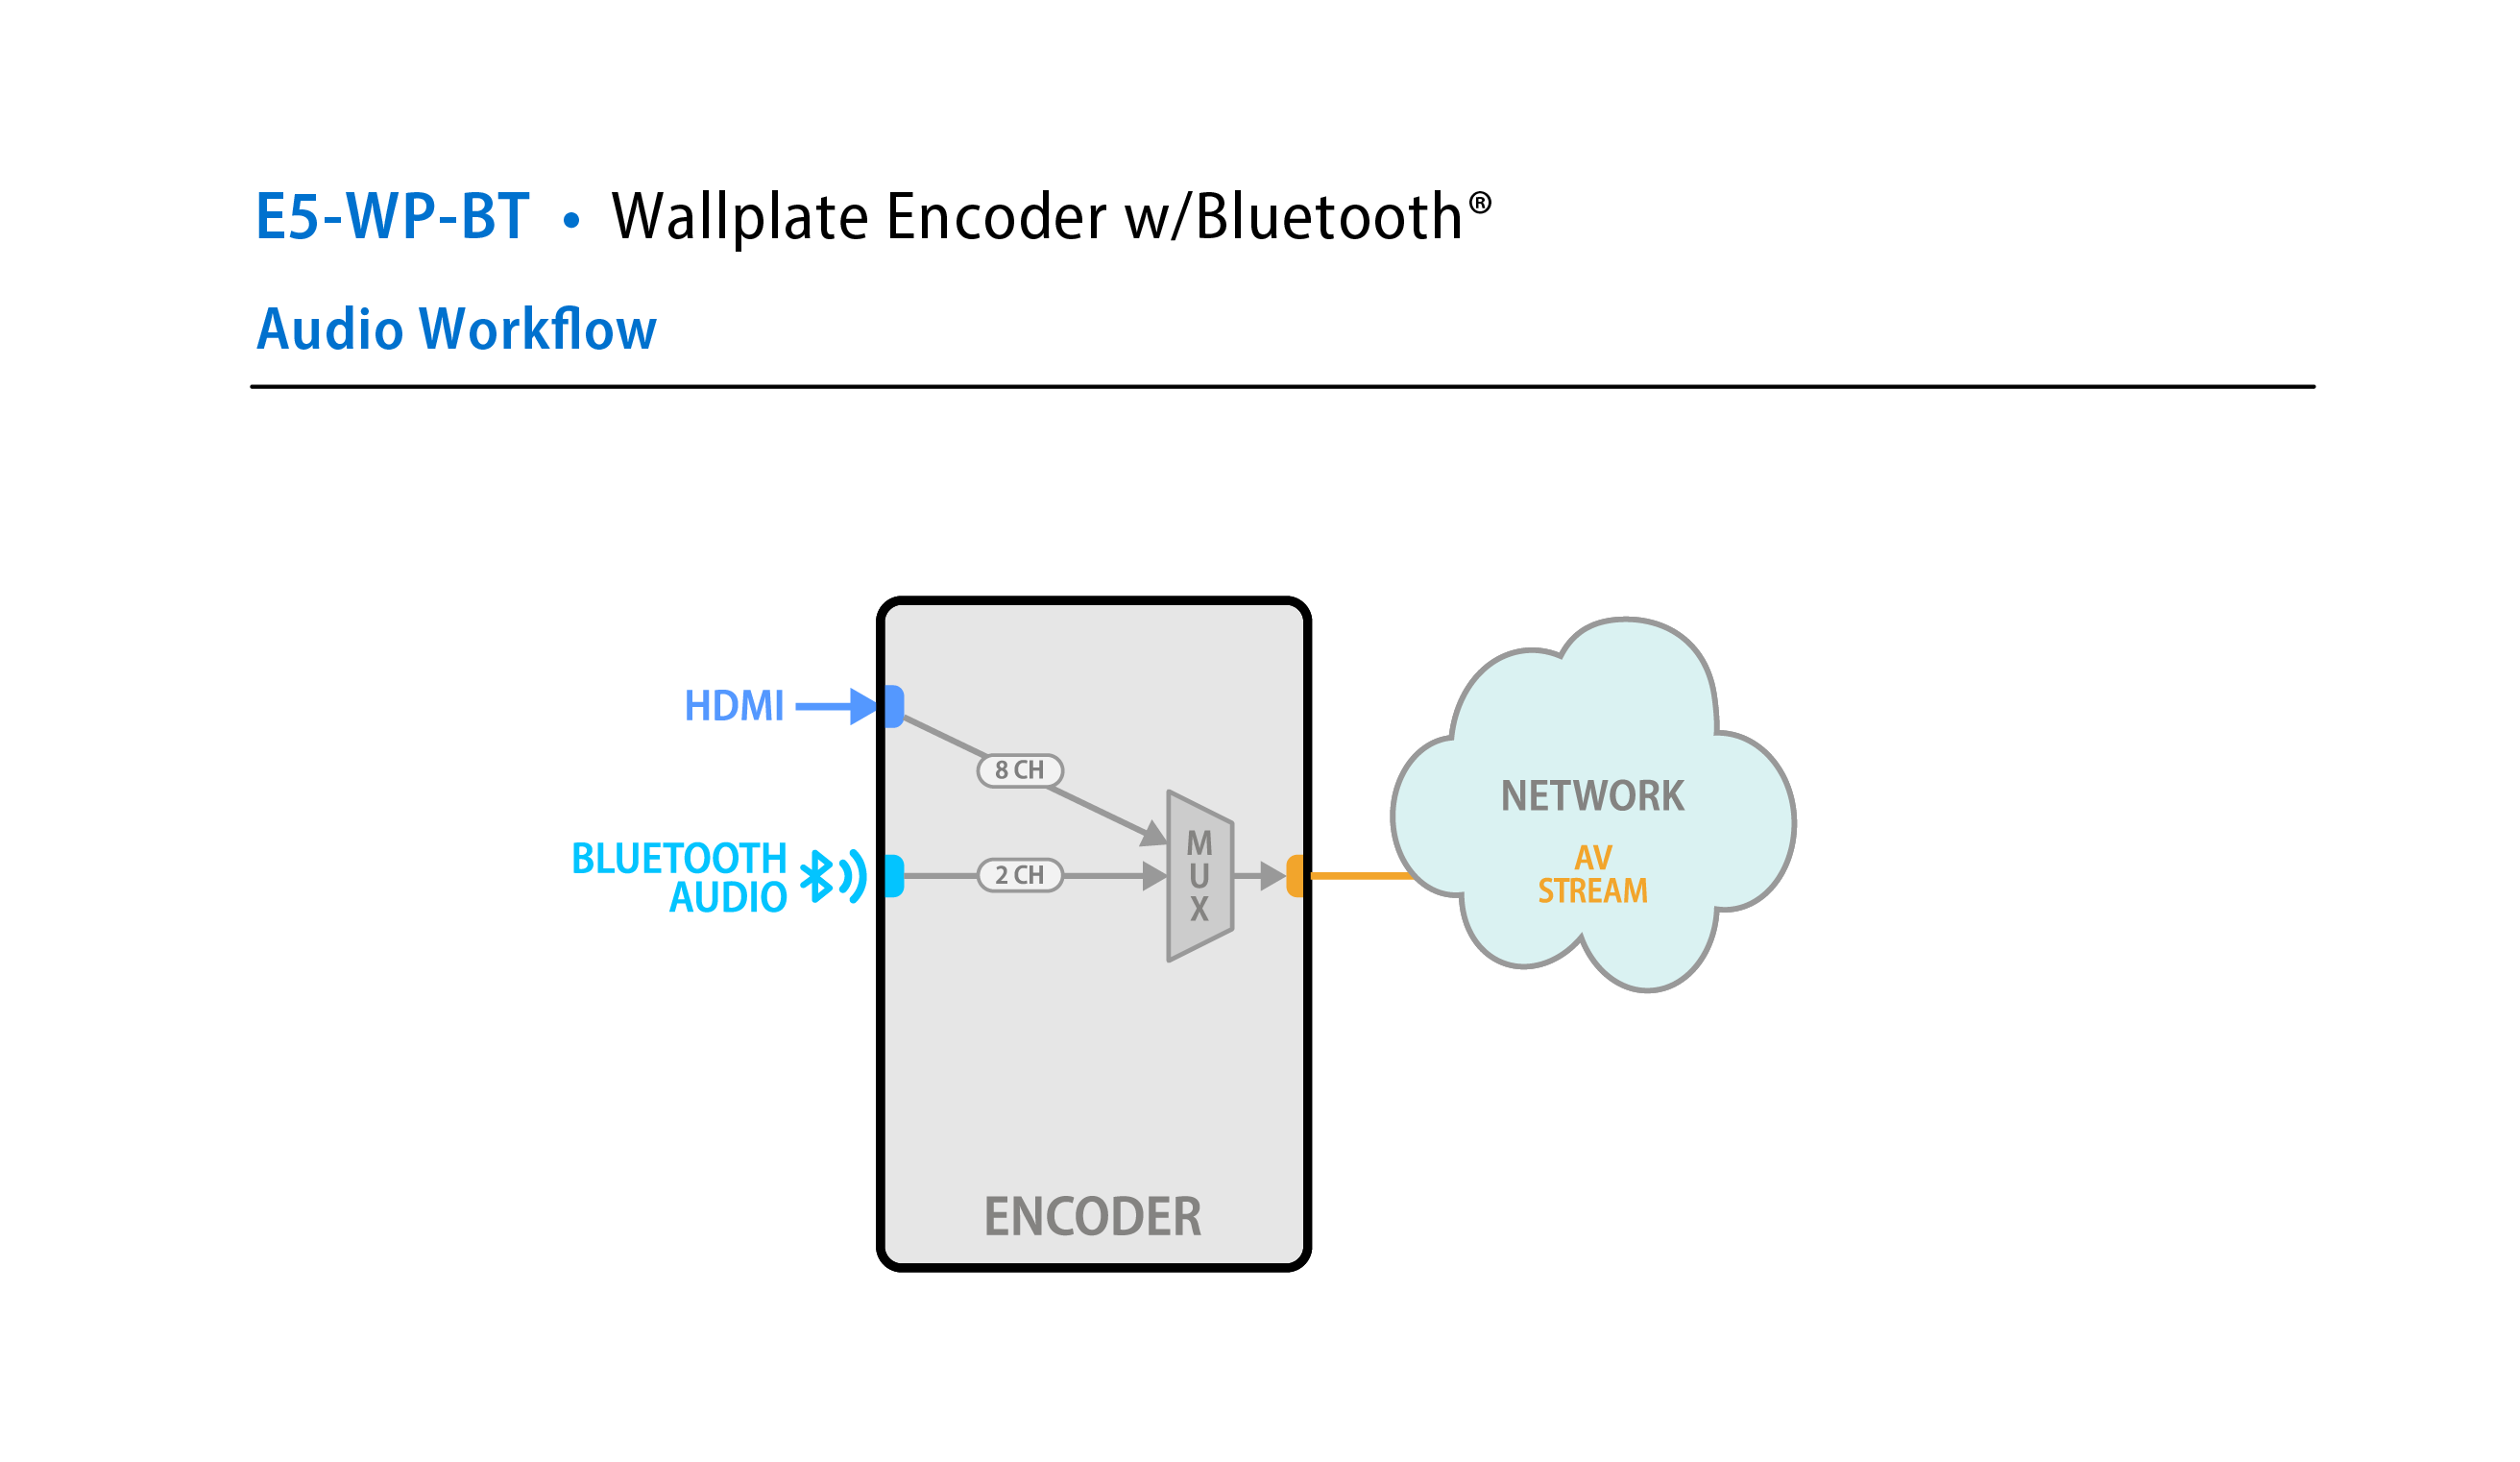 E5-WP-BT Workflow